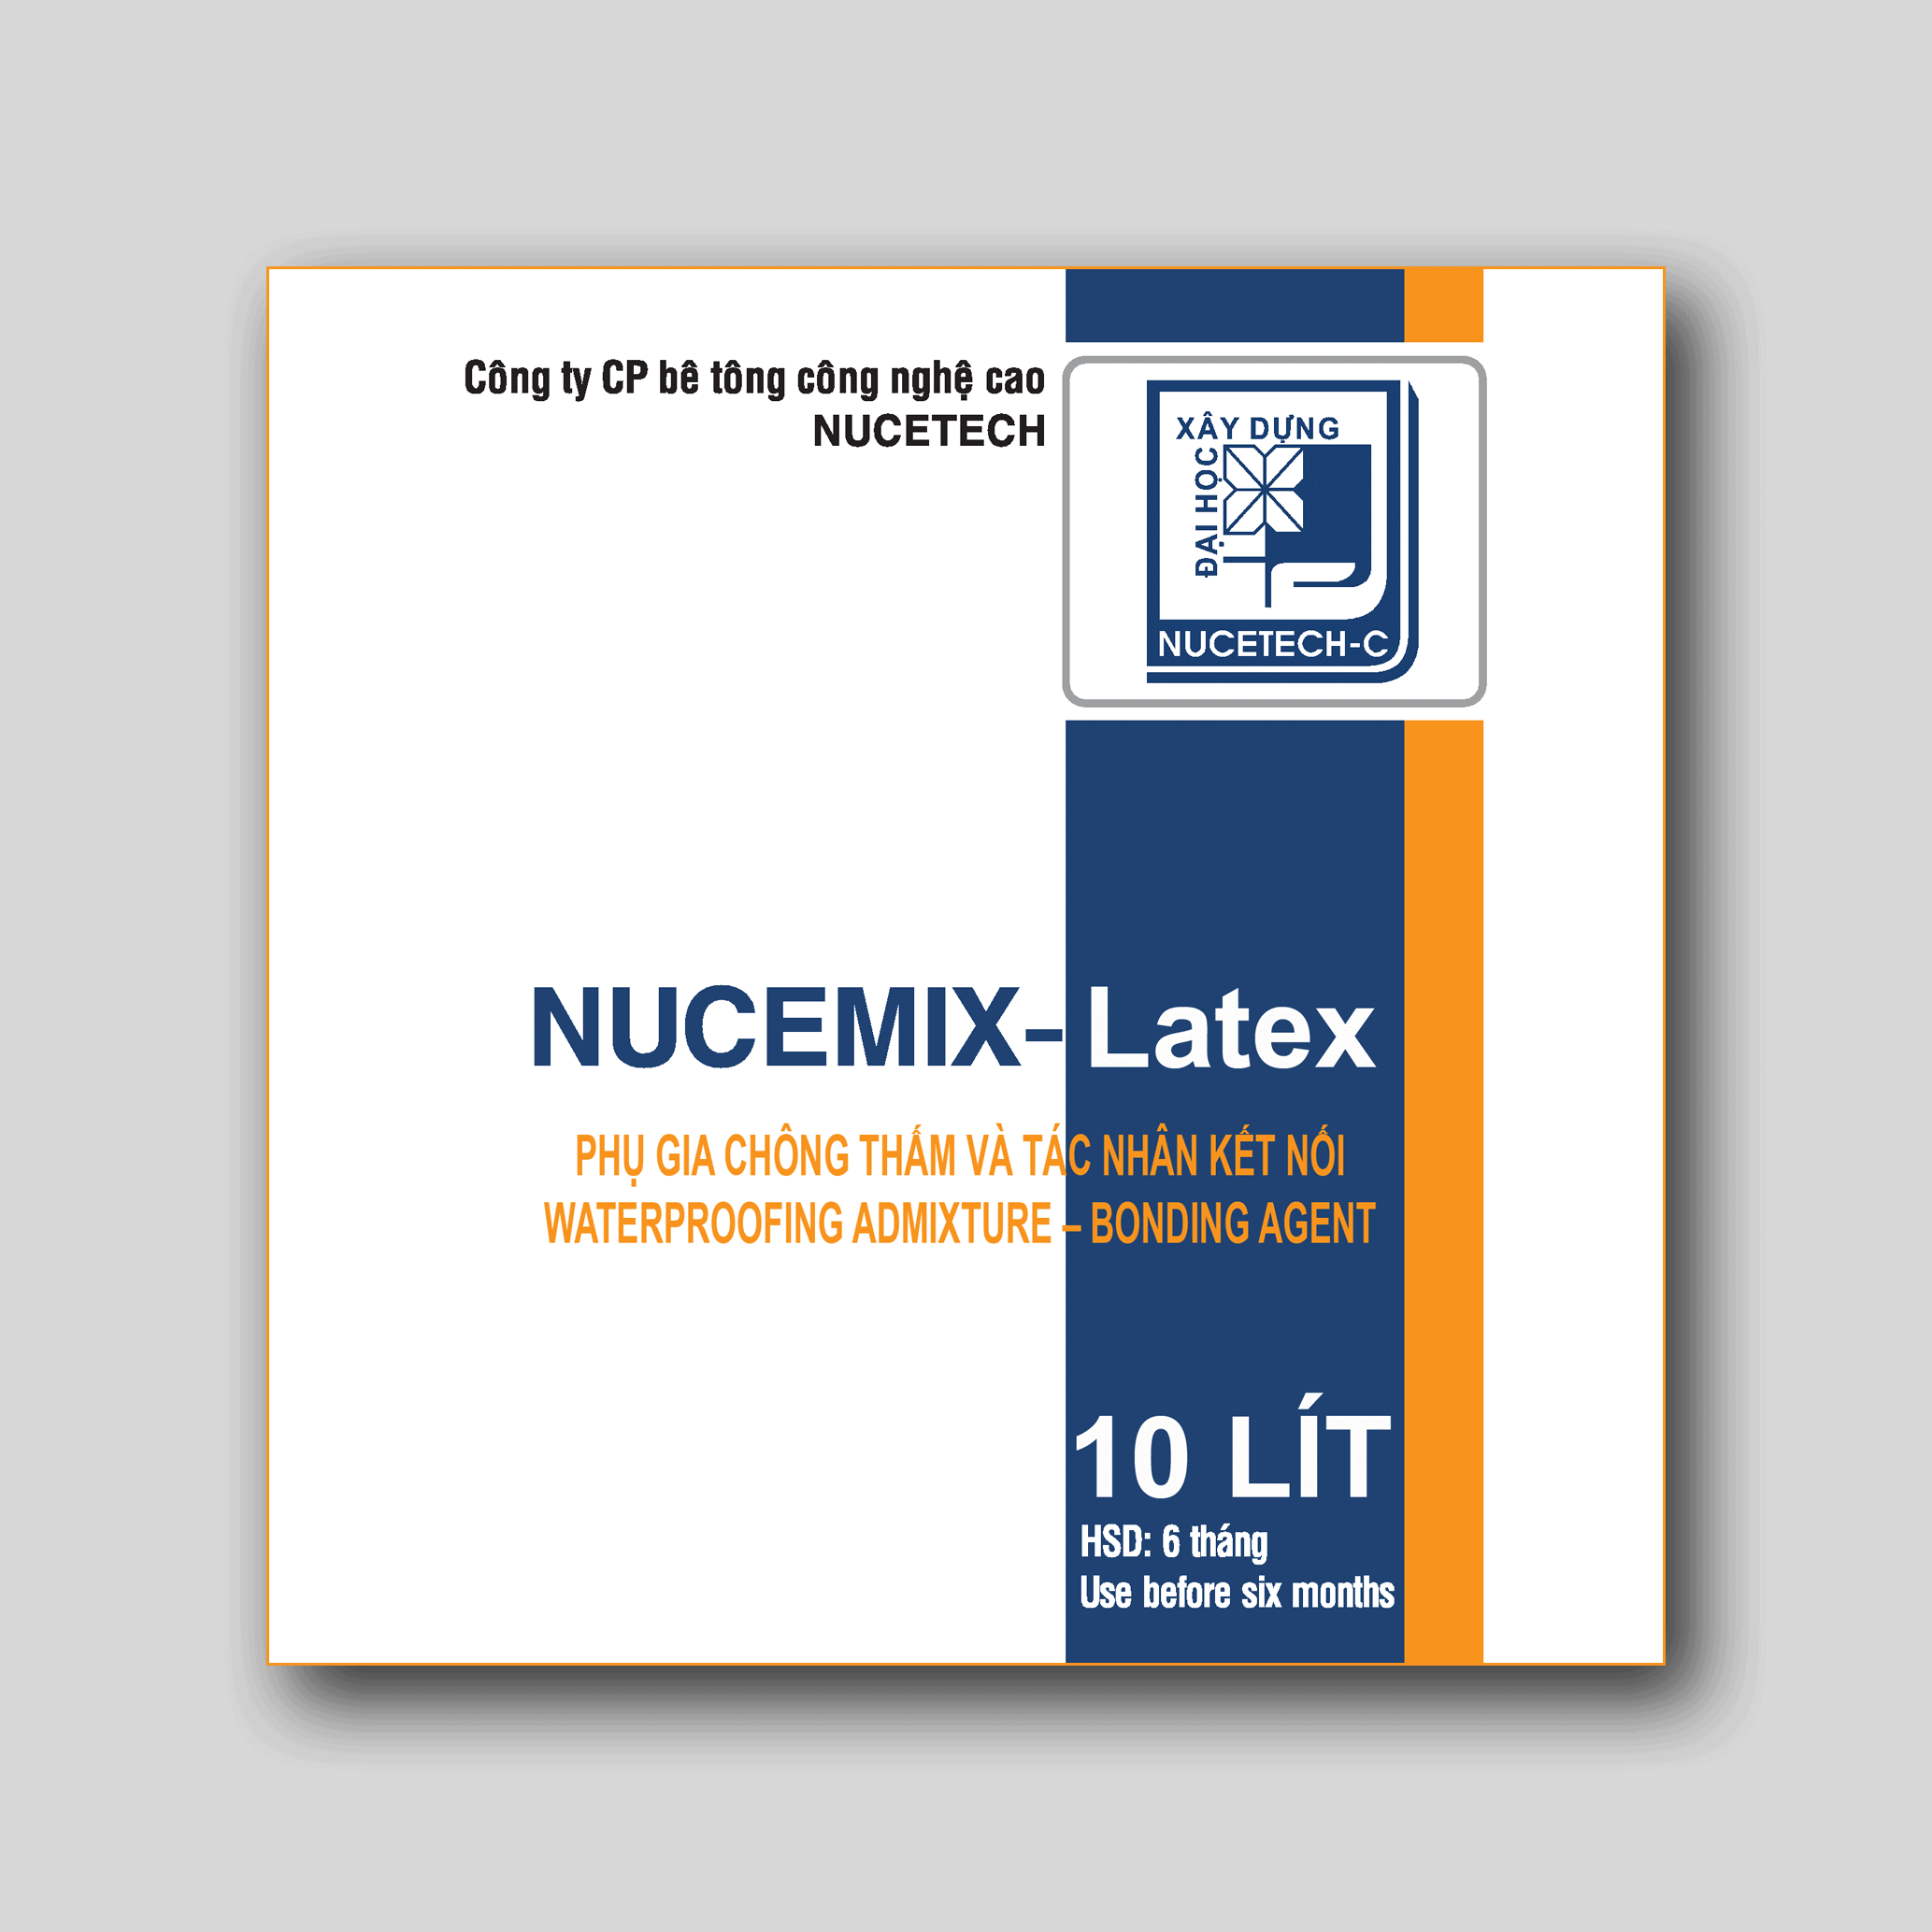 Nucemix-Latex-daiphuvinh